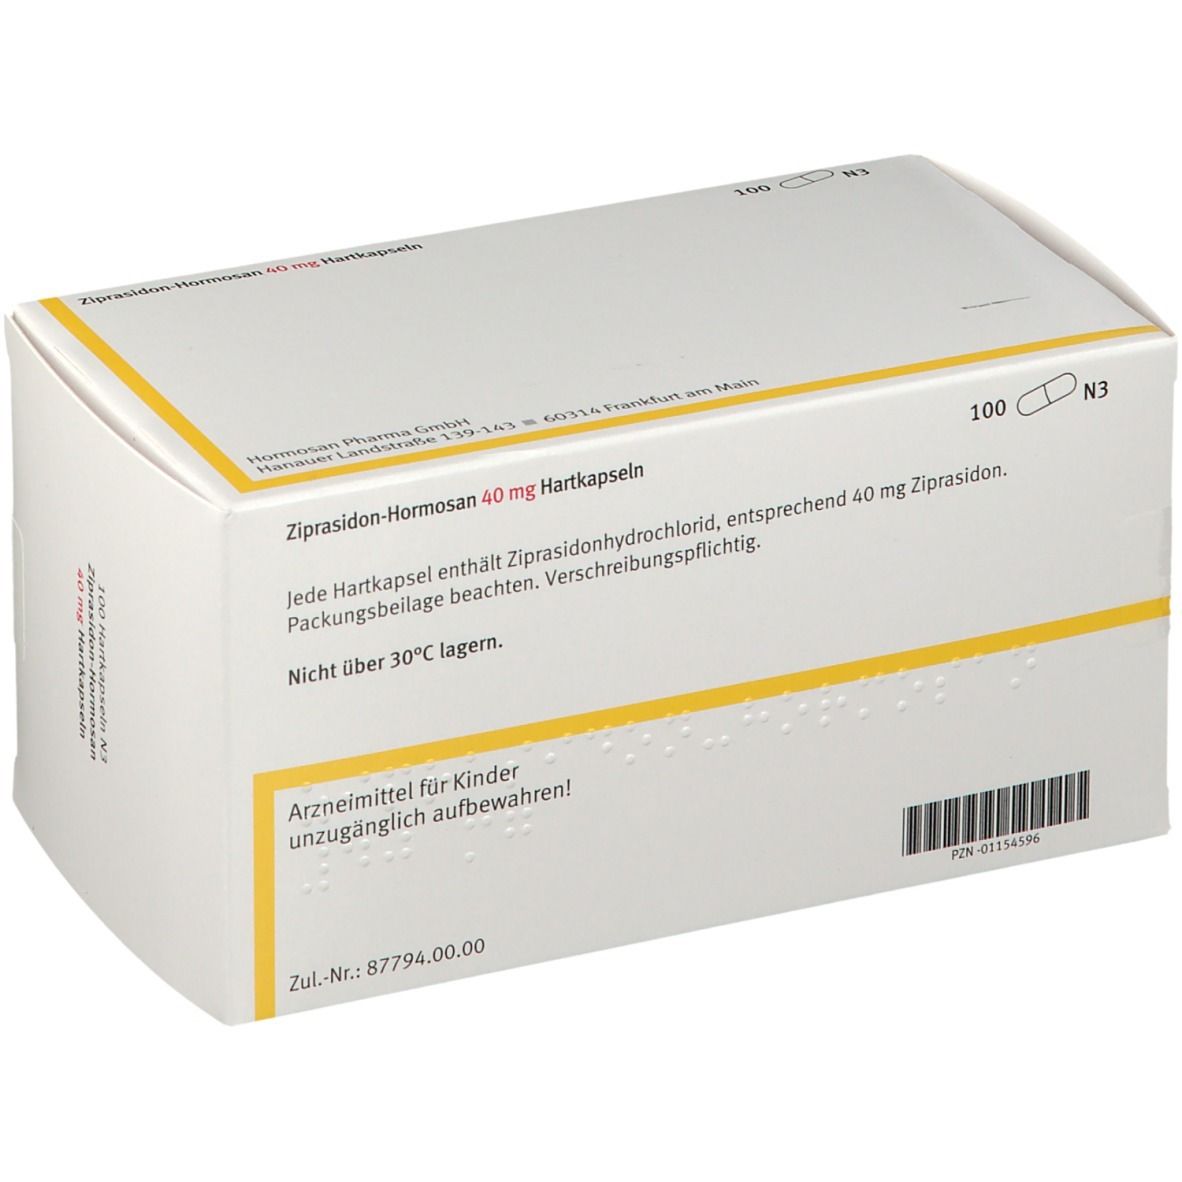 Ziprasidon Hormosan 40 mg